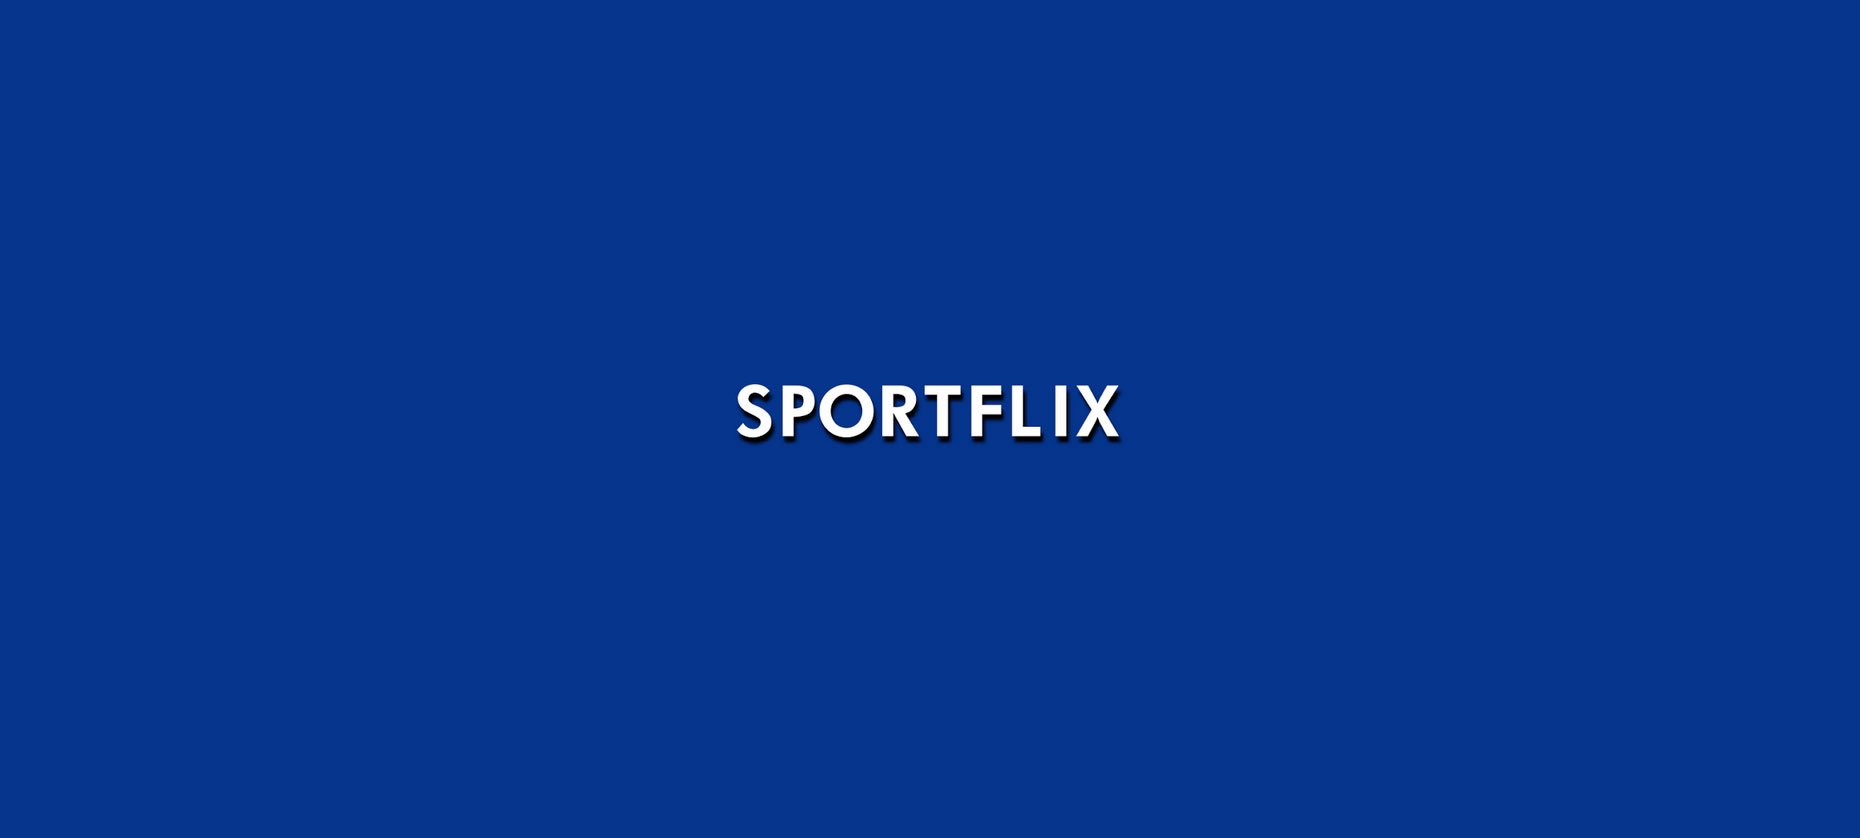 Sportflix, a Netflix dos esportes